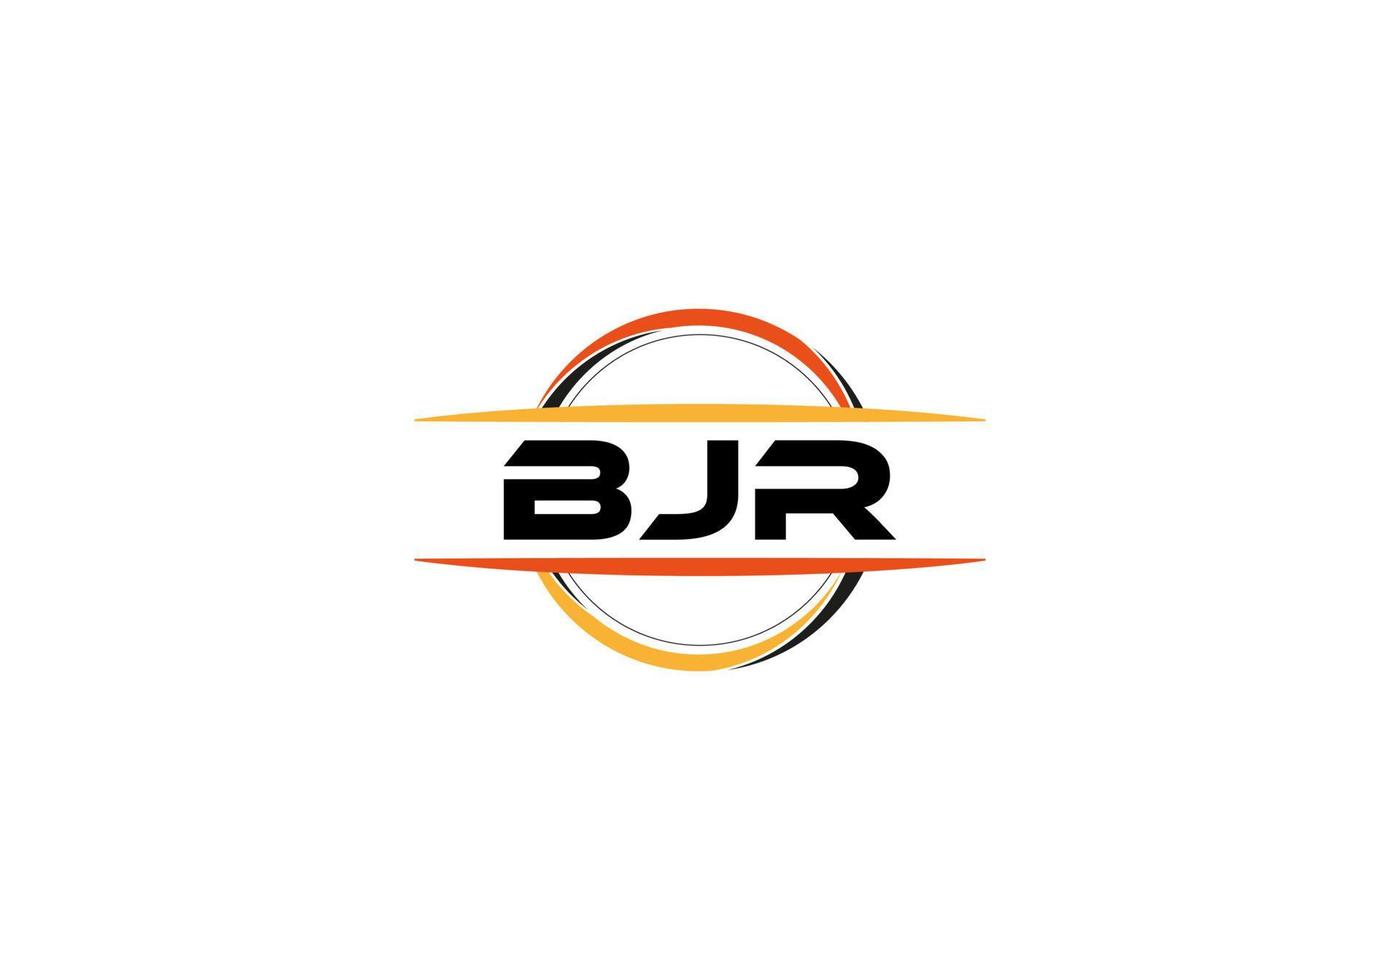 bjr letra realeza elipse forma logo. bjr cepillo Arte logo. bjr logo para un compañía, negocio, y comercial usar. vector